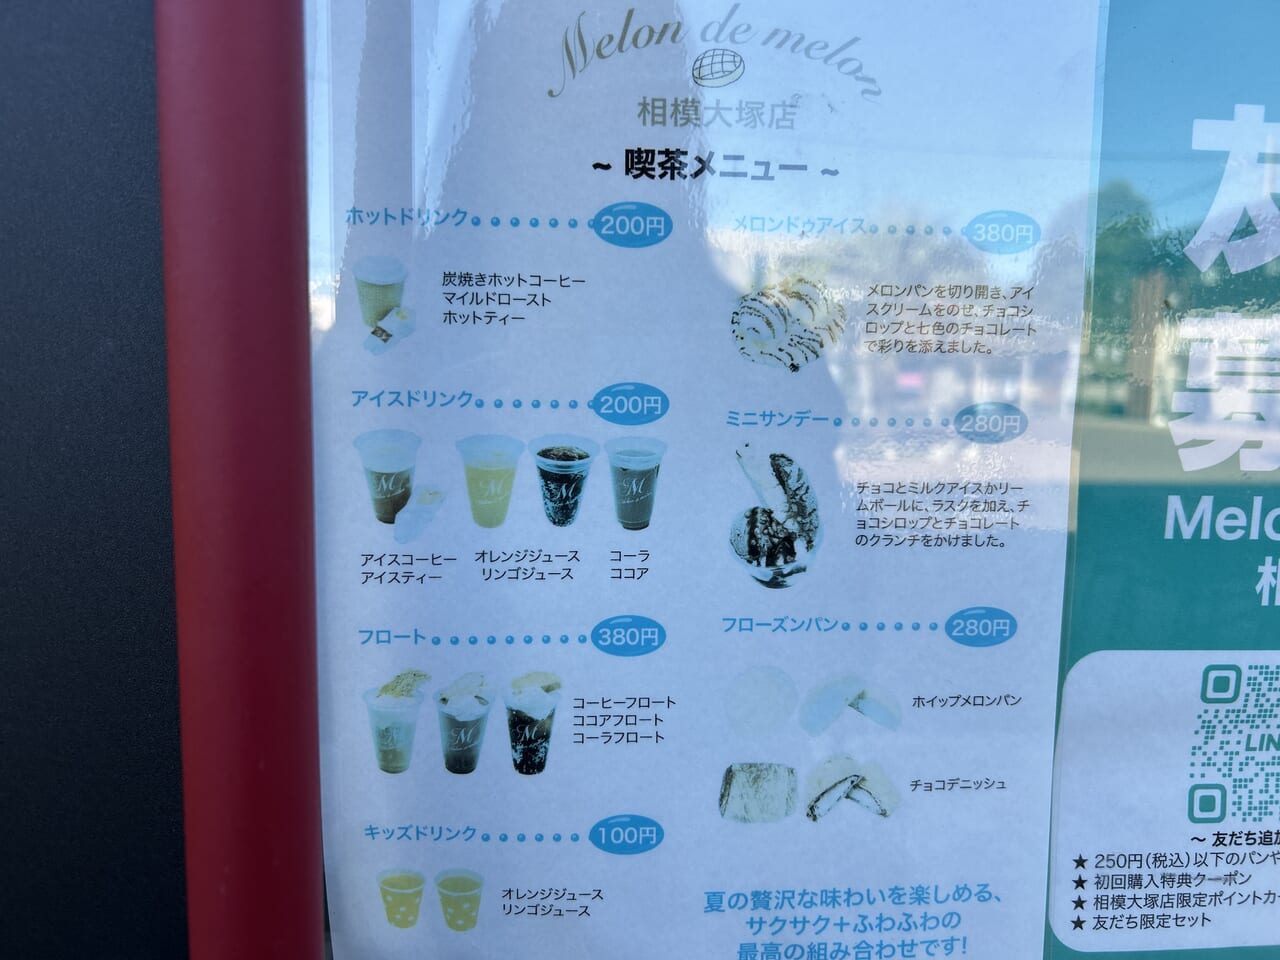 Melon de melon 相模大塚店の喫茶メニュー